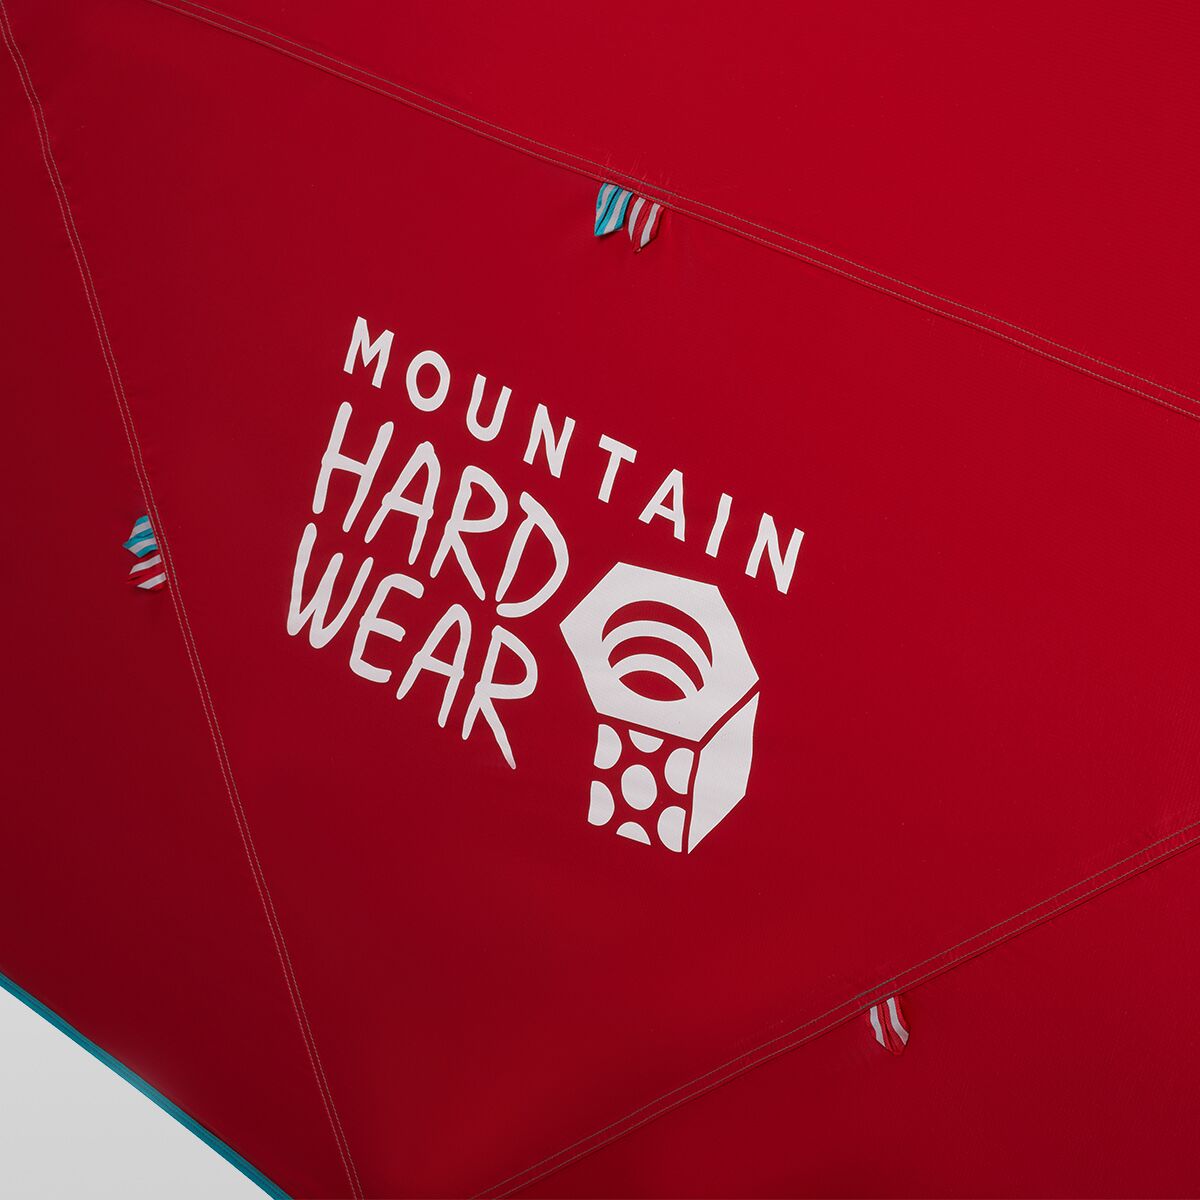 Mountain Hardwear AC 2 Tent 2-Person 4-Season - Hike & Camp